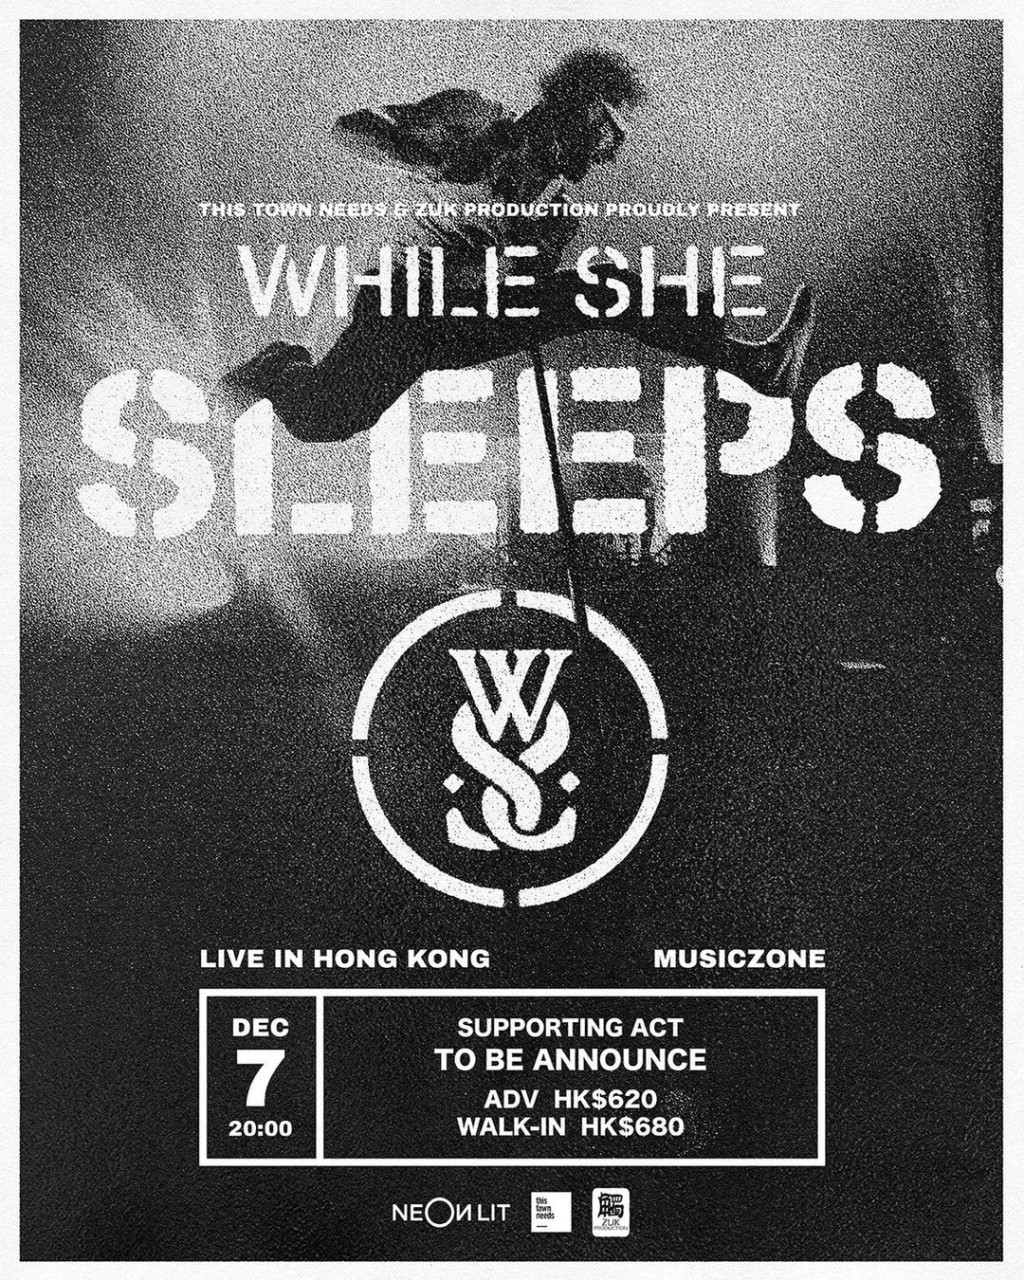 While She Sleeps 香港演唱會2023